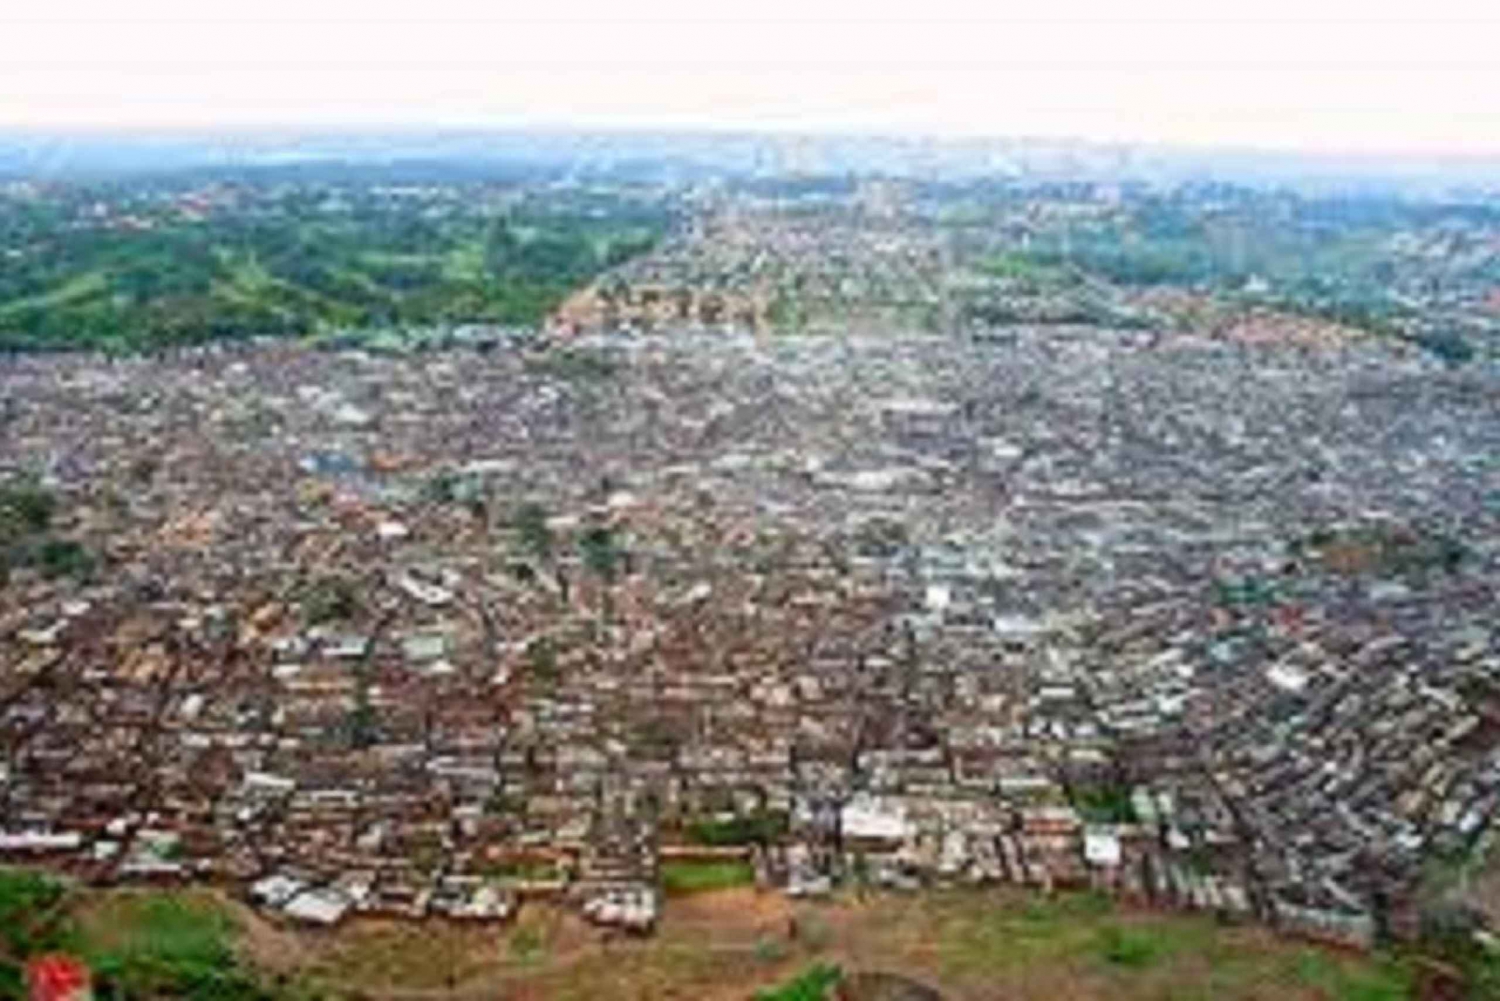 Rundtur i slummen i Kibera